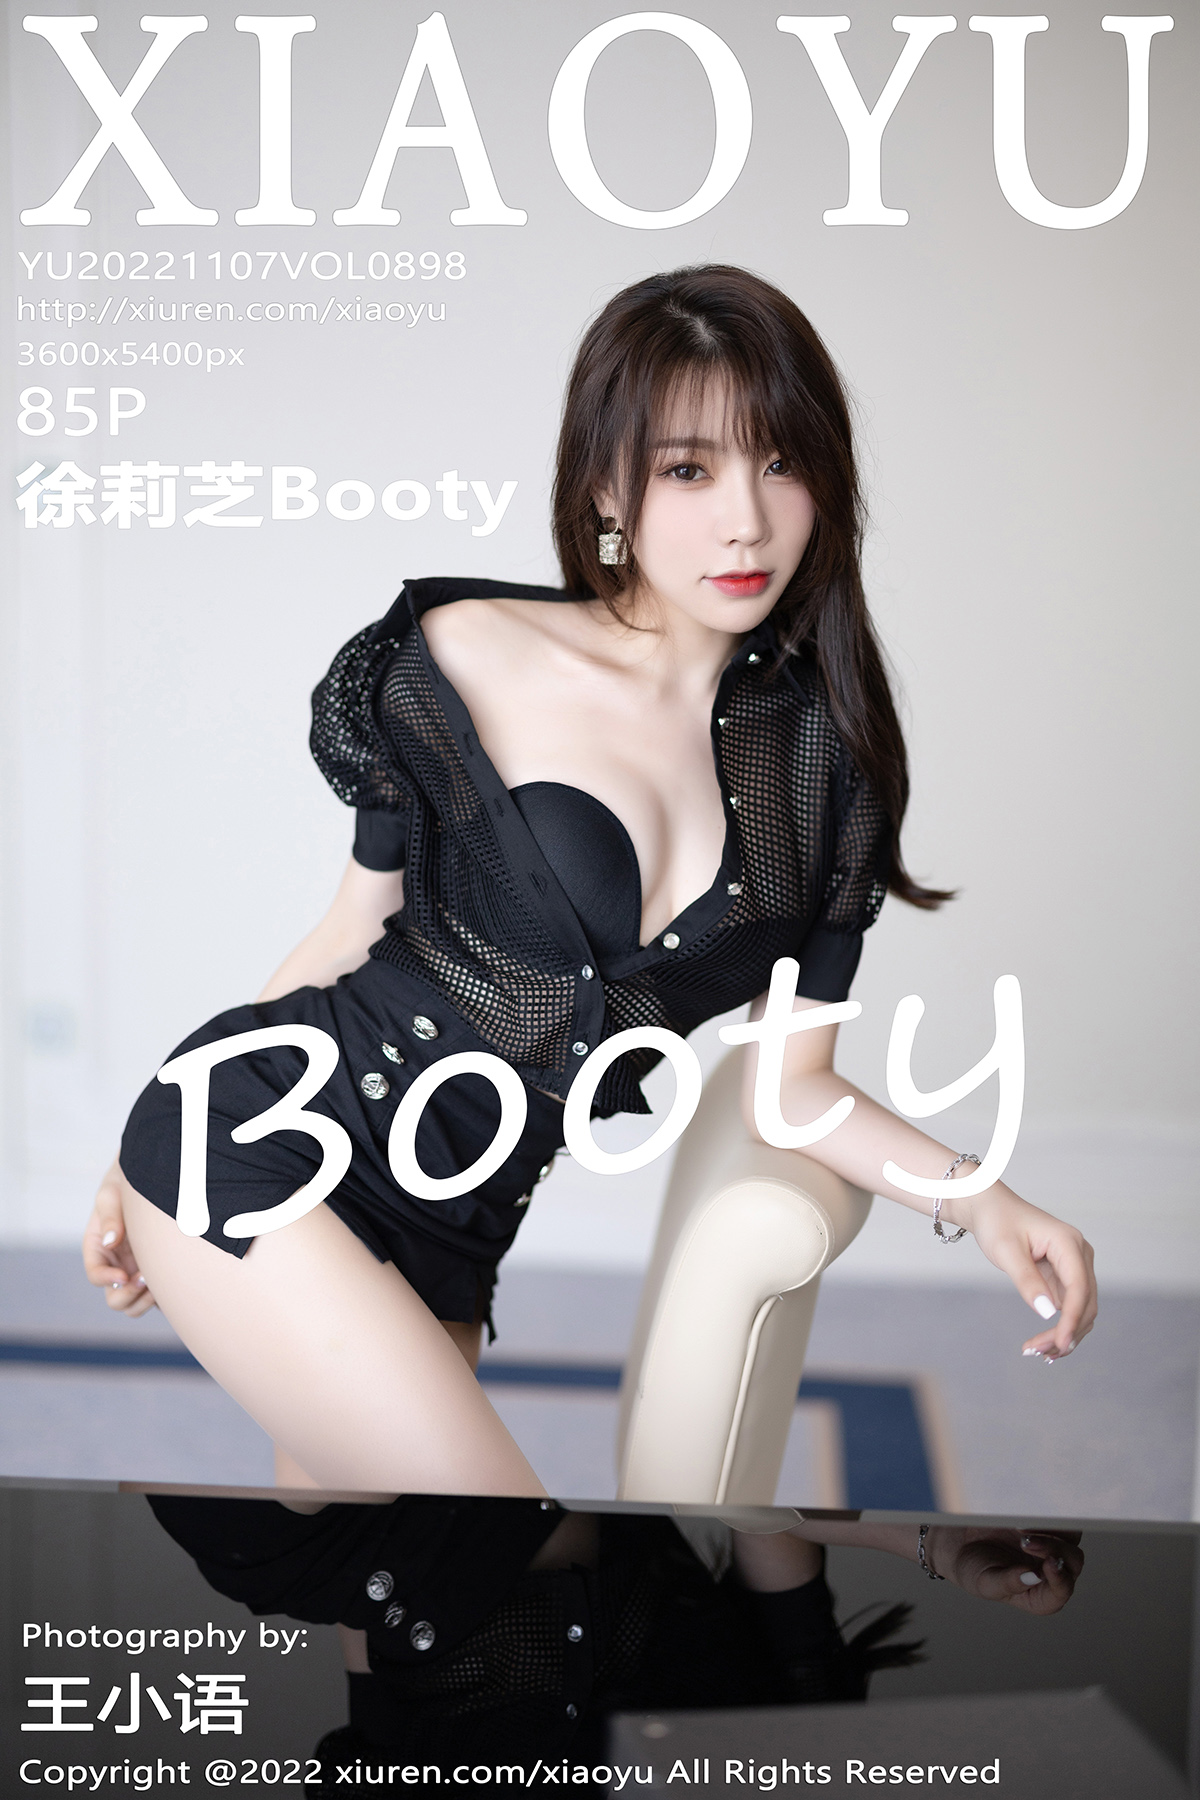 【XIAOYU語畫界】2022.11.07 Vol.898 徐莉芝Booty 完整版無水印寫真【85P】 - 貼圖 - 清涼寫真 -